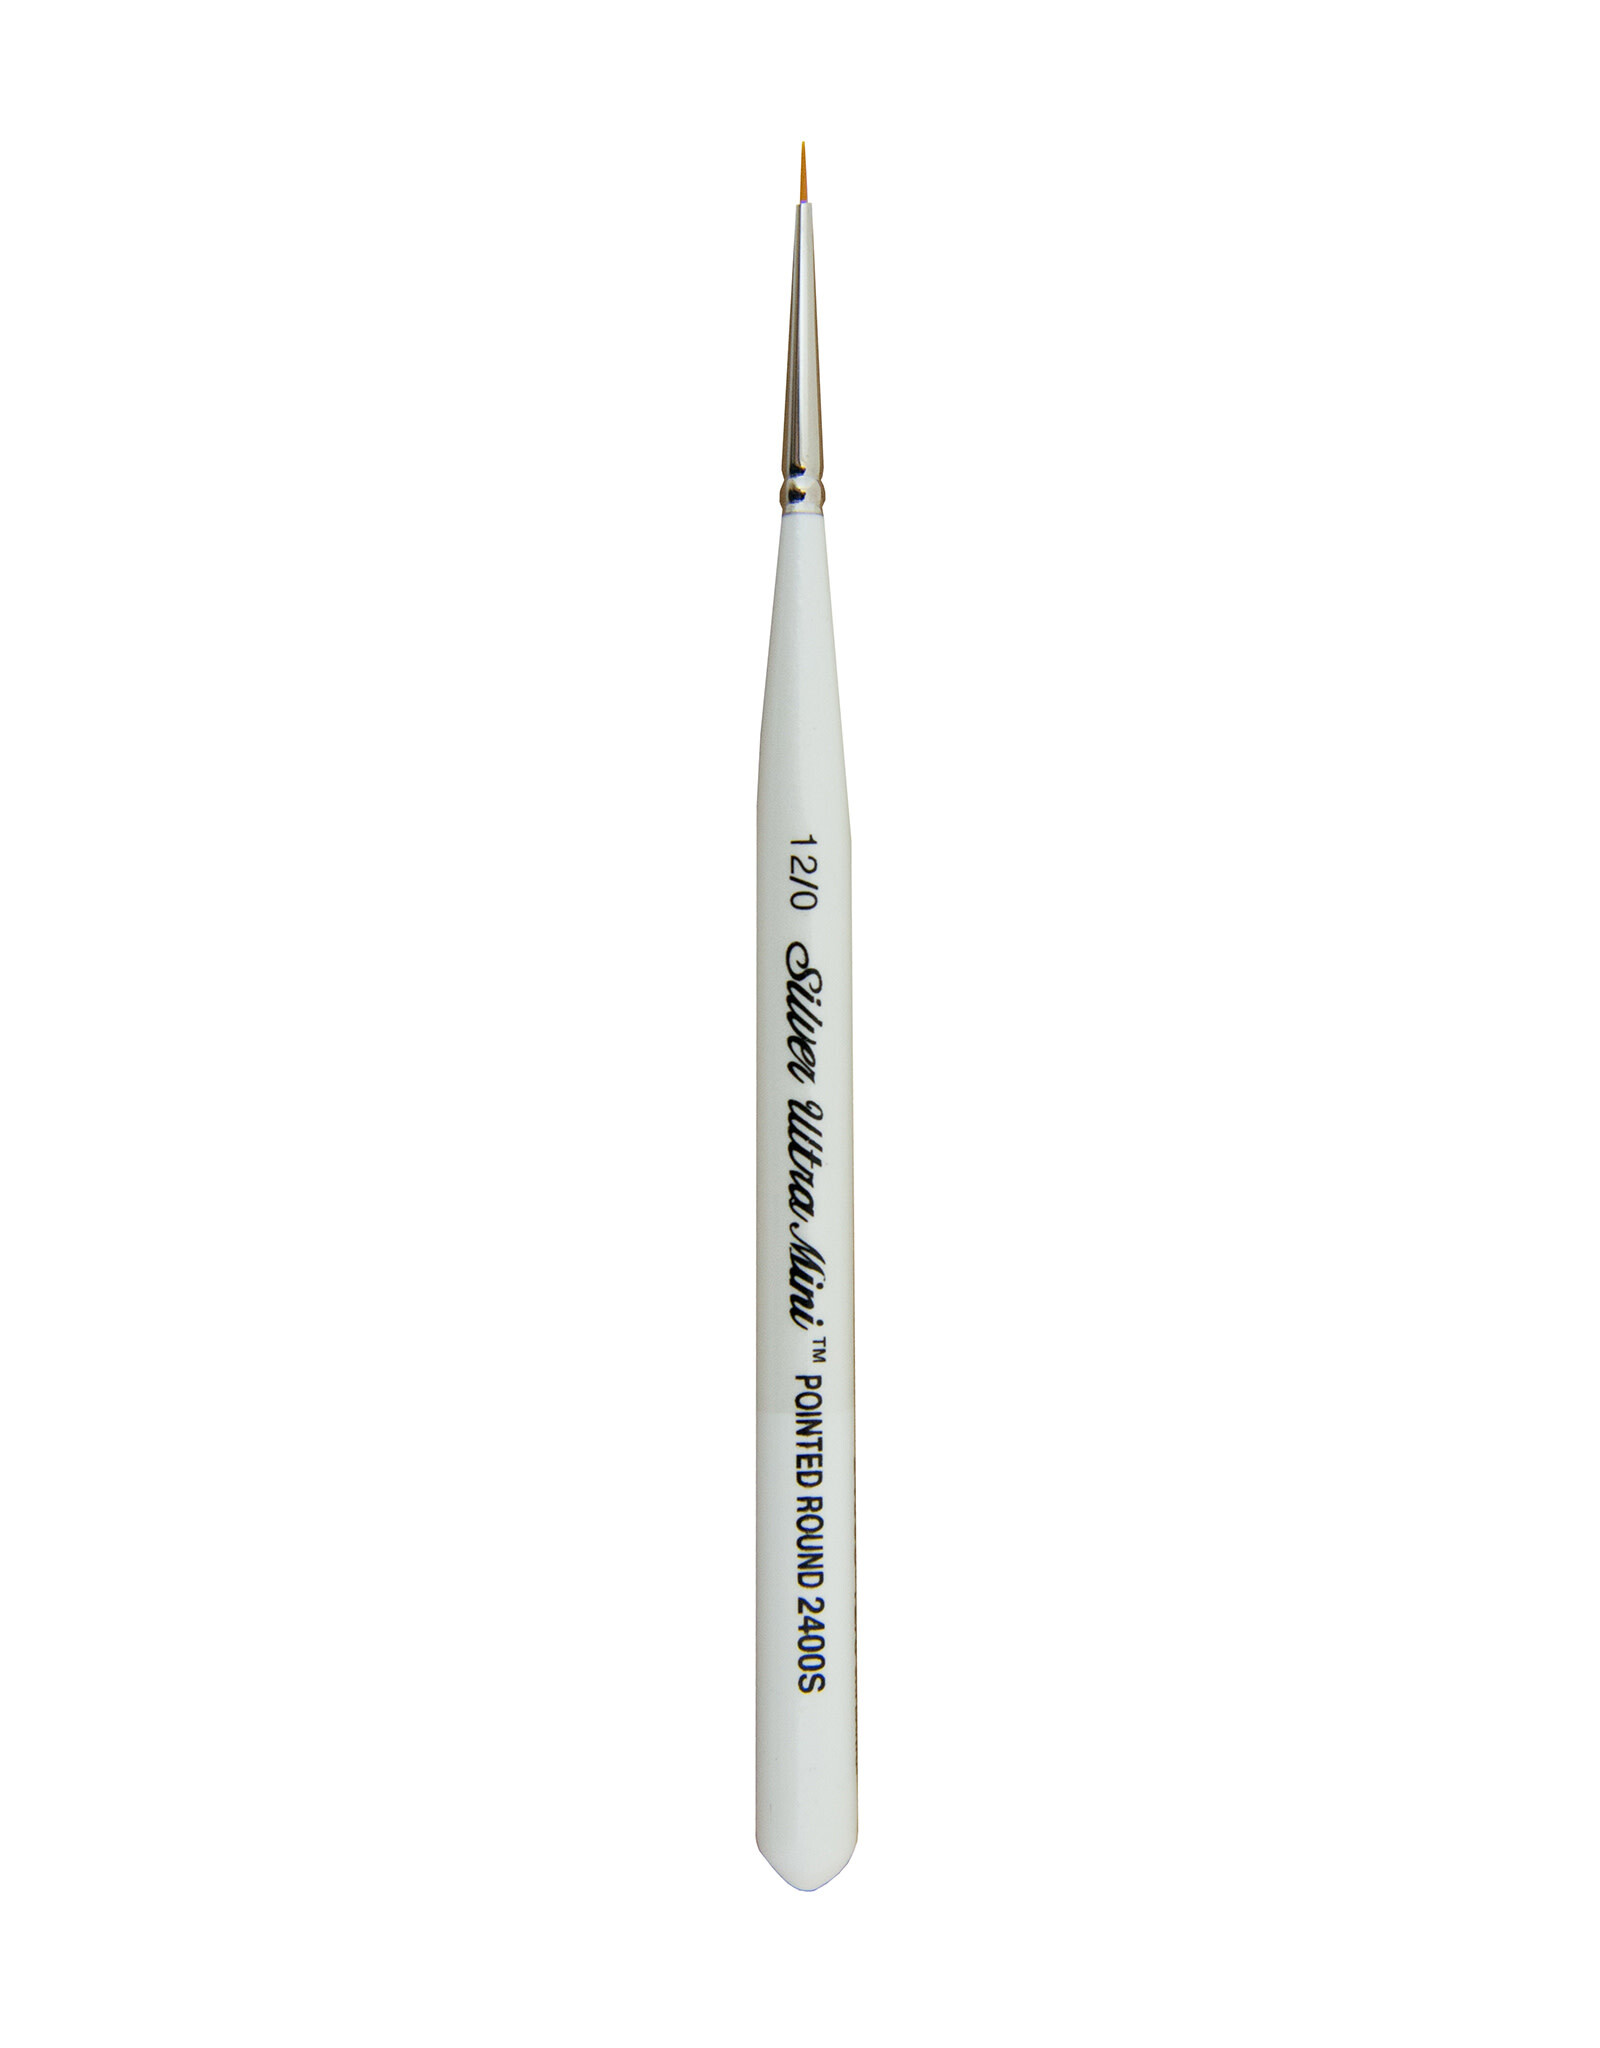 Silver Brush Limited Silver Brush Ultra Mini Round # 12/0